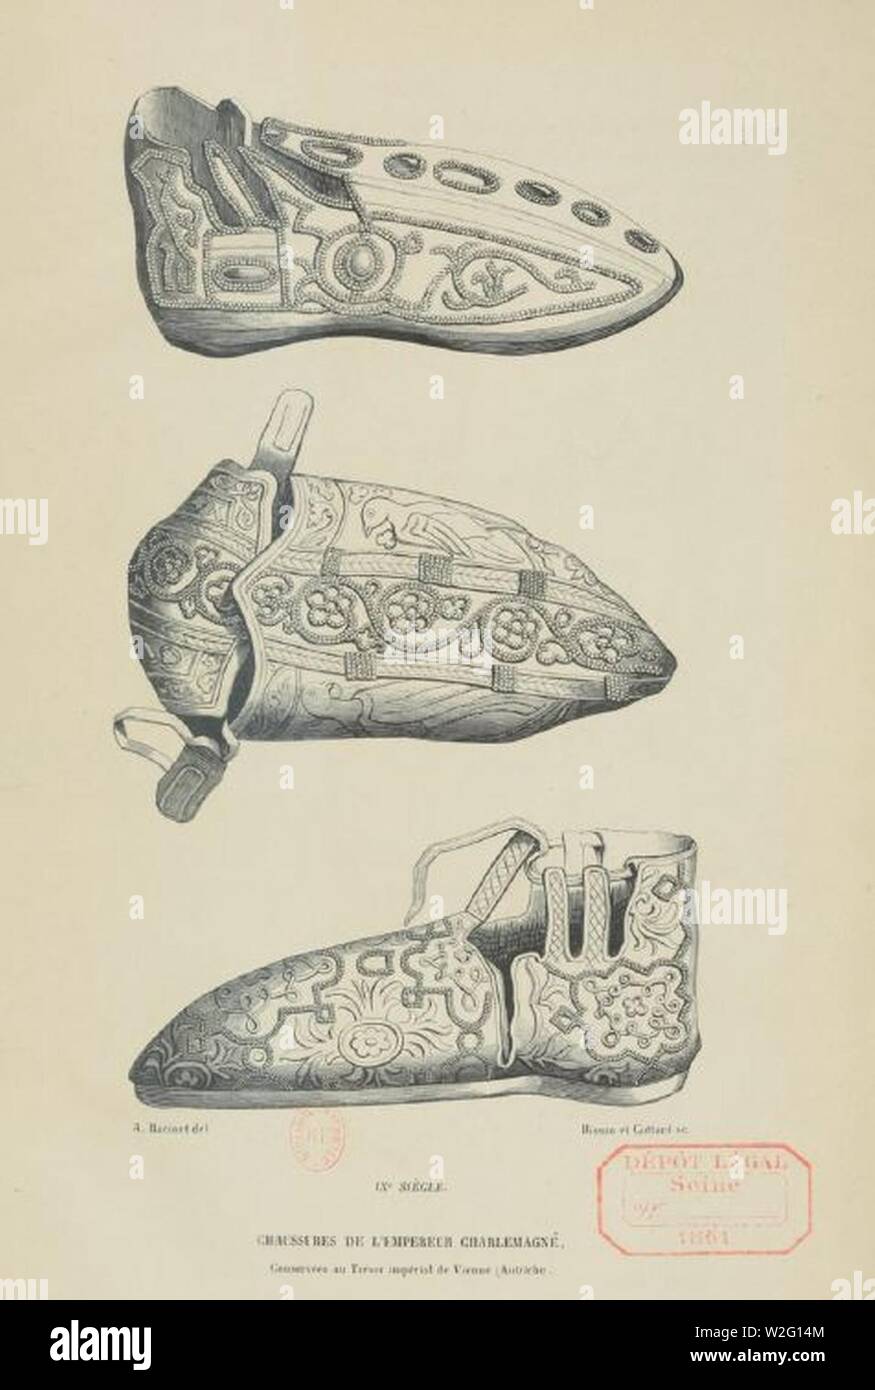 Chaussures de l'Empereur Charlemagne. Stockfoto